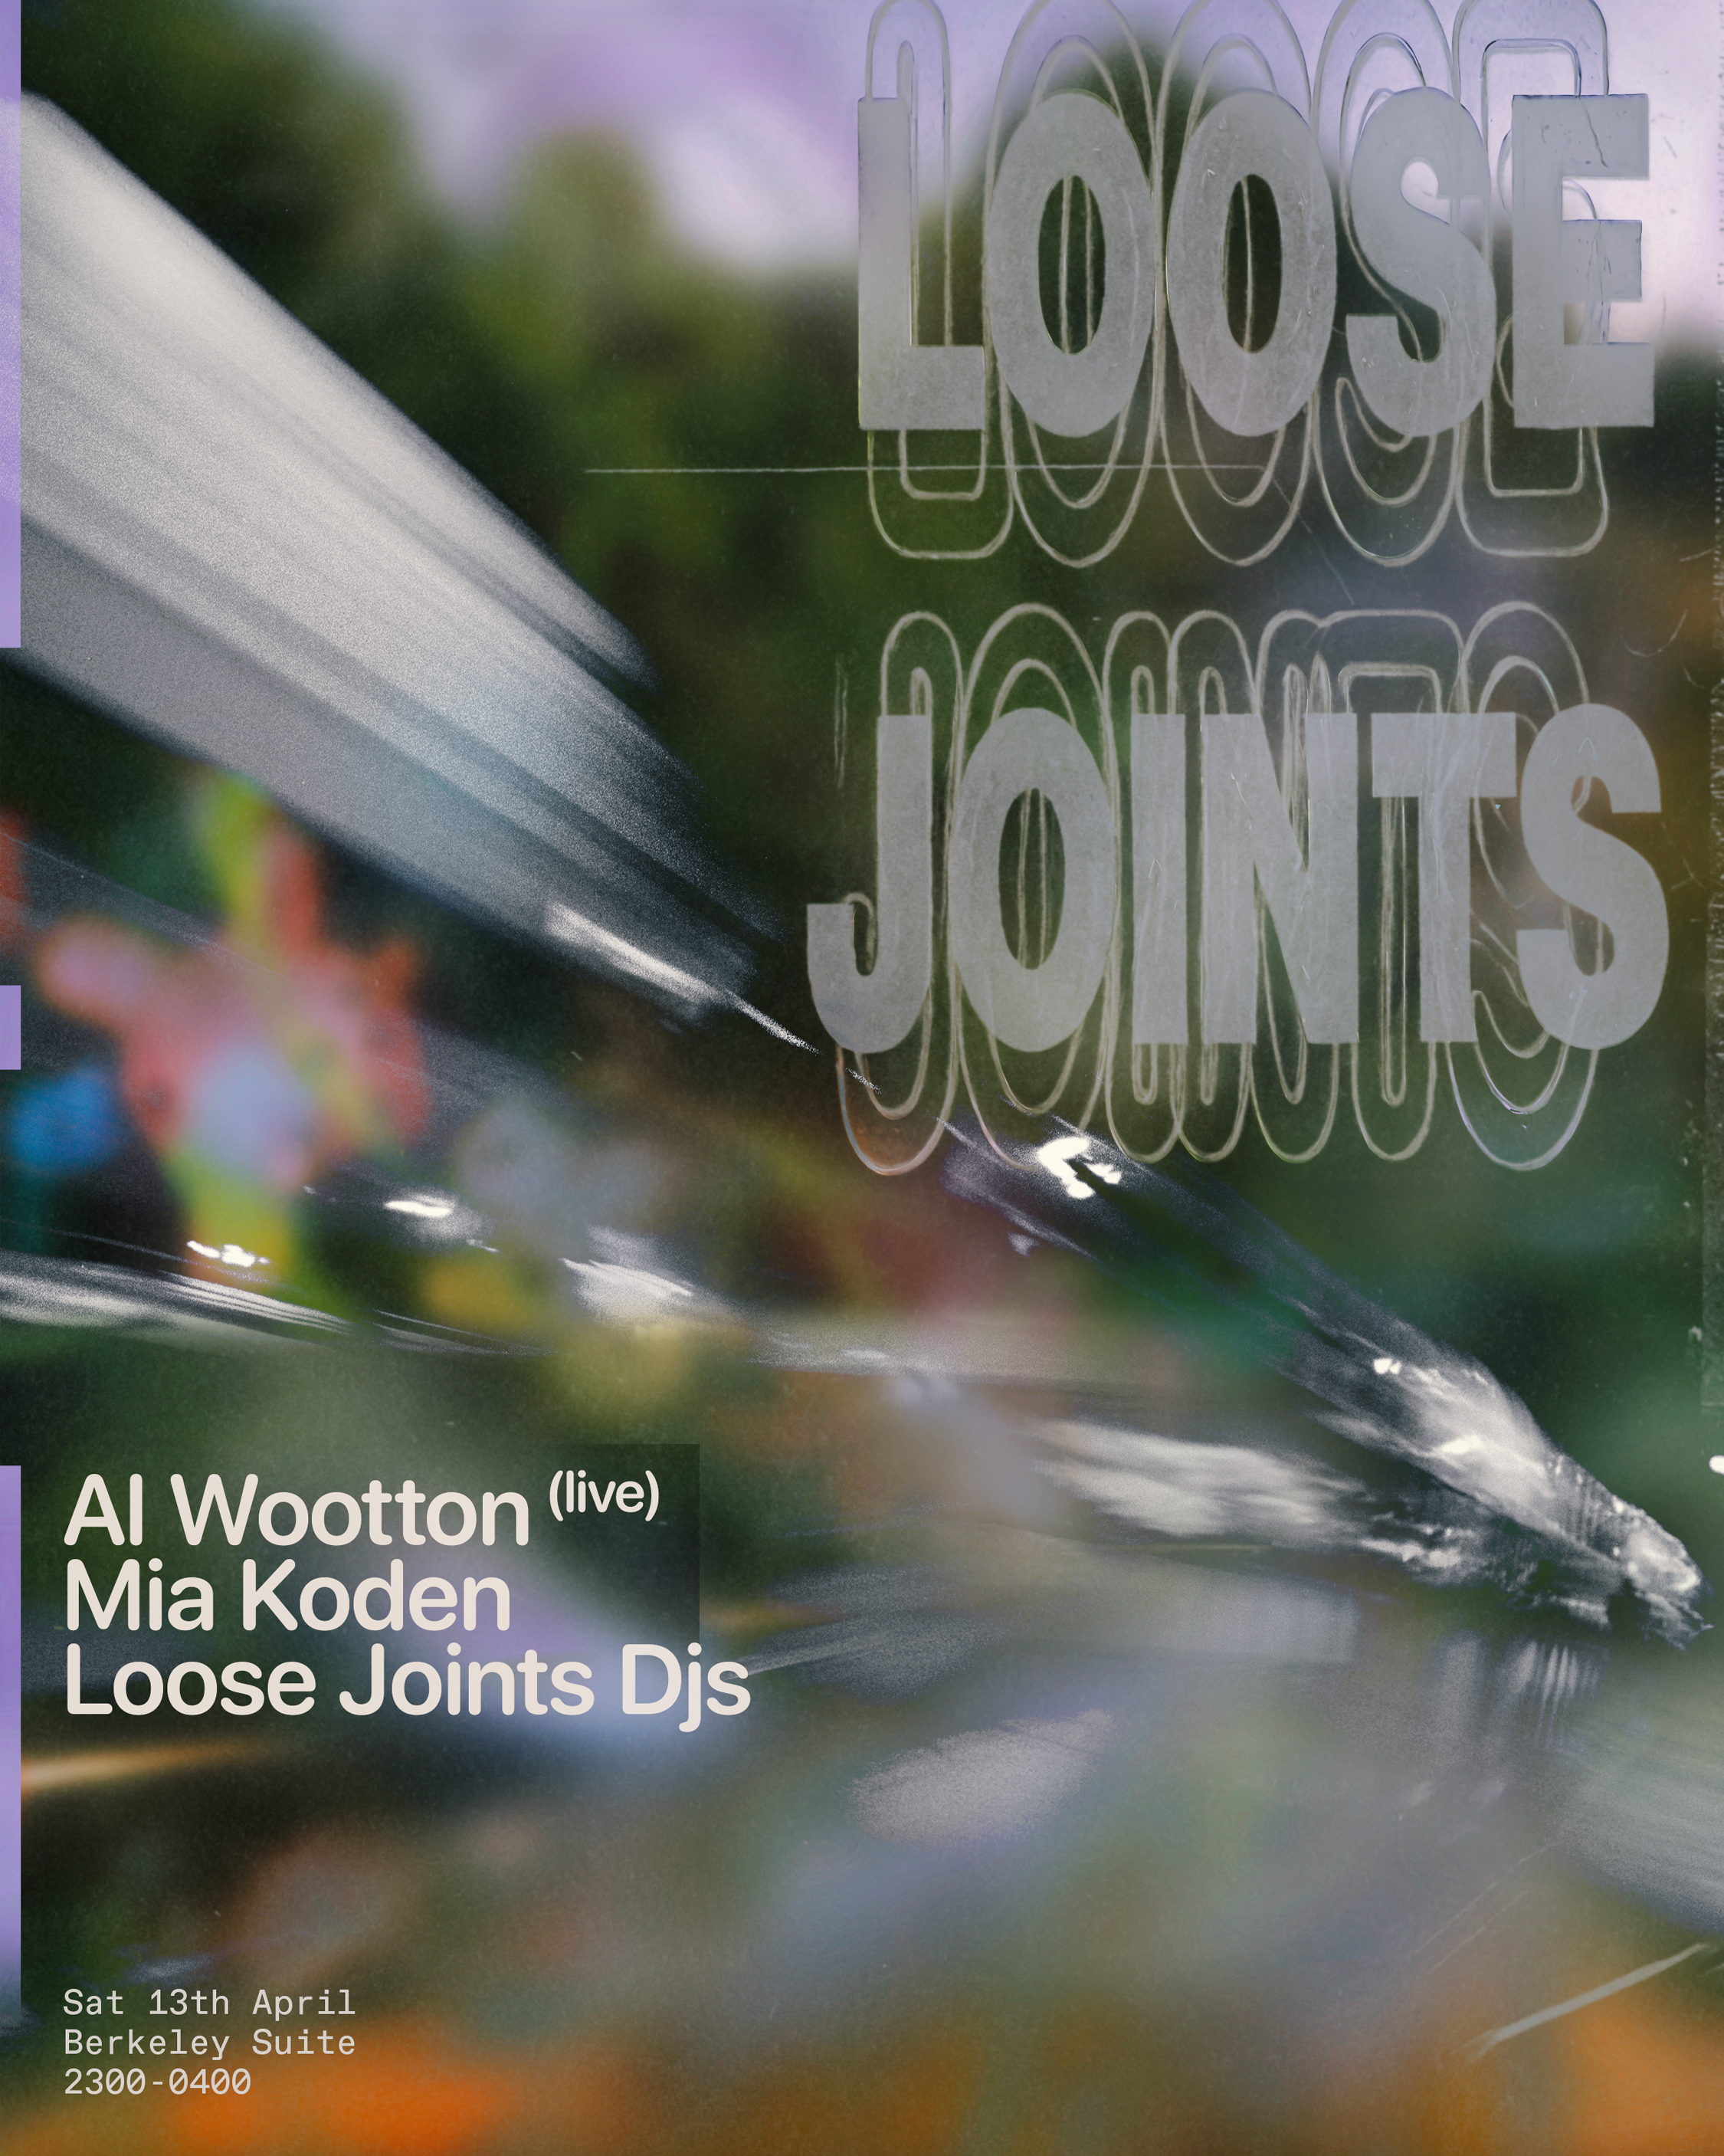 **TICKETS ON DOOR** Loose Joints - Al Wootton (live), Mia Koden - フライヤー表